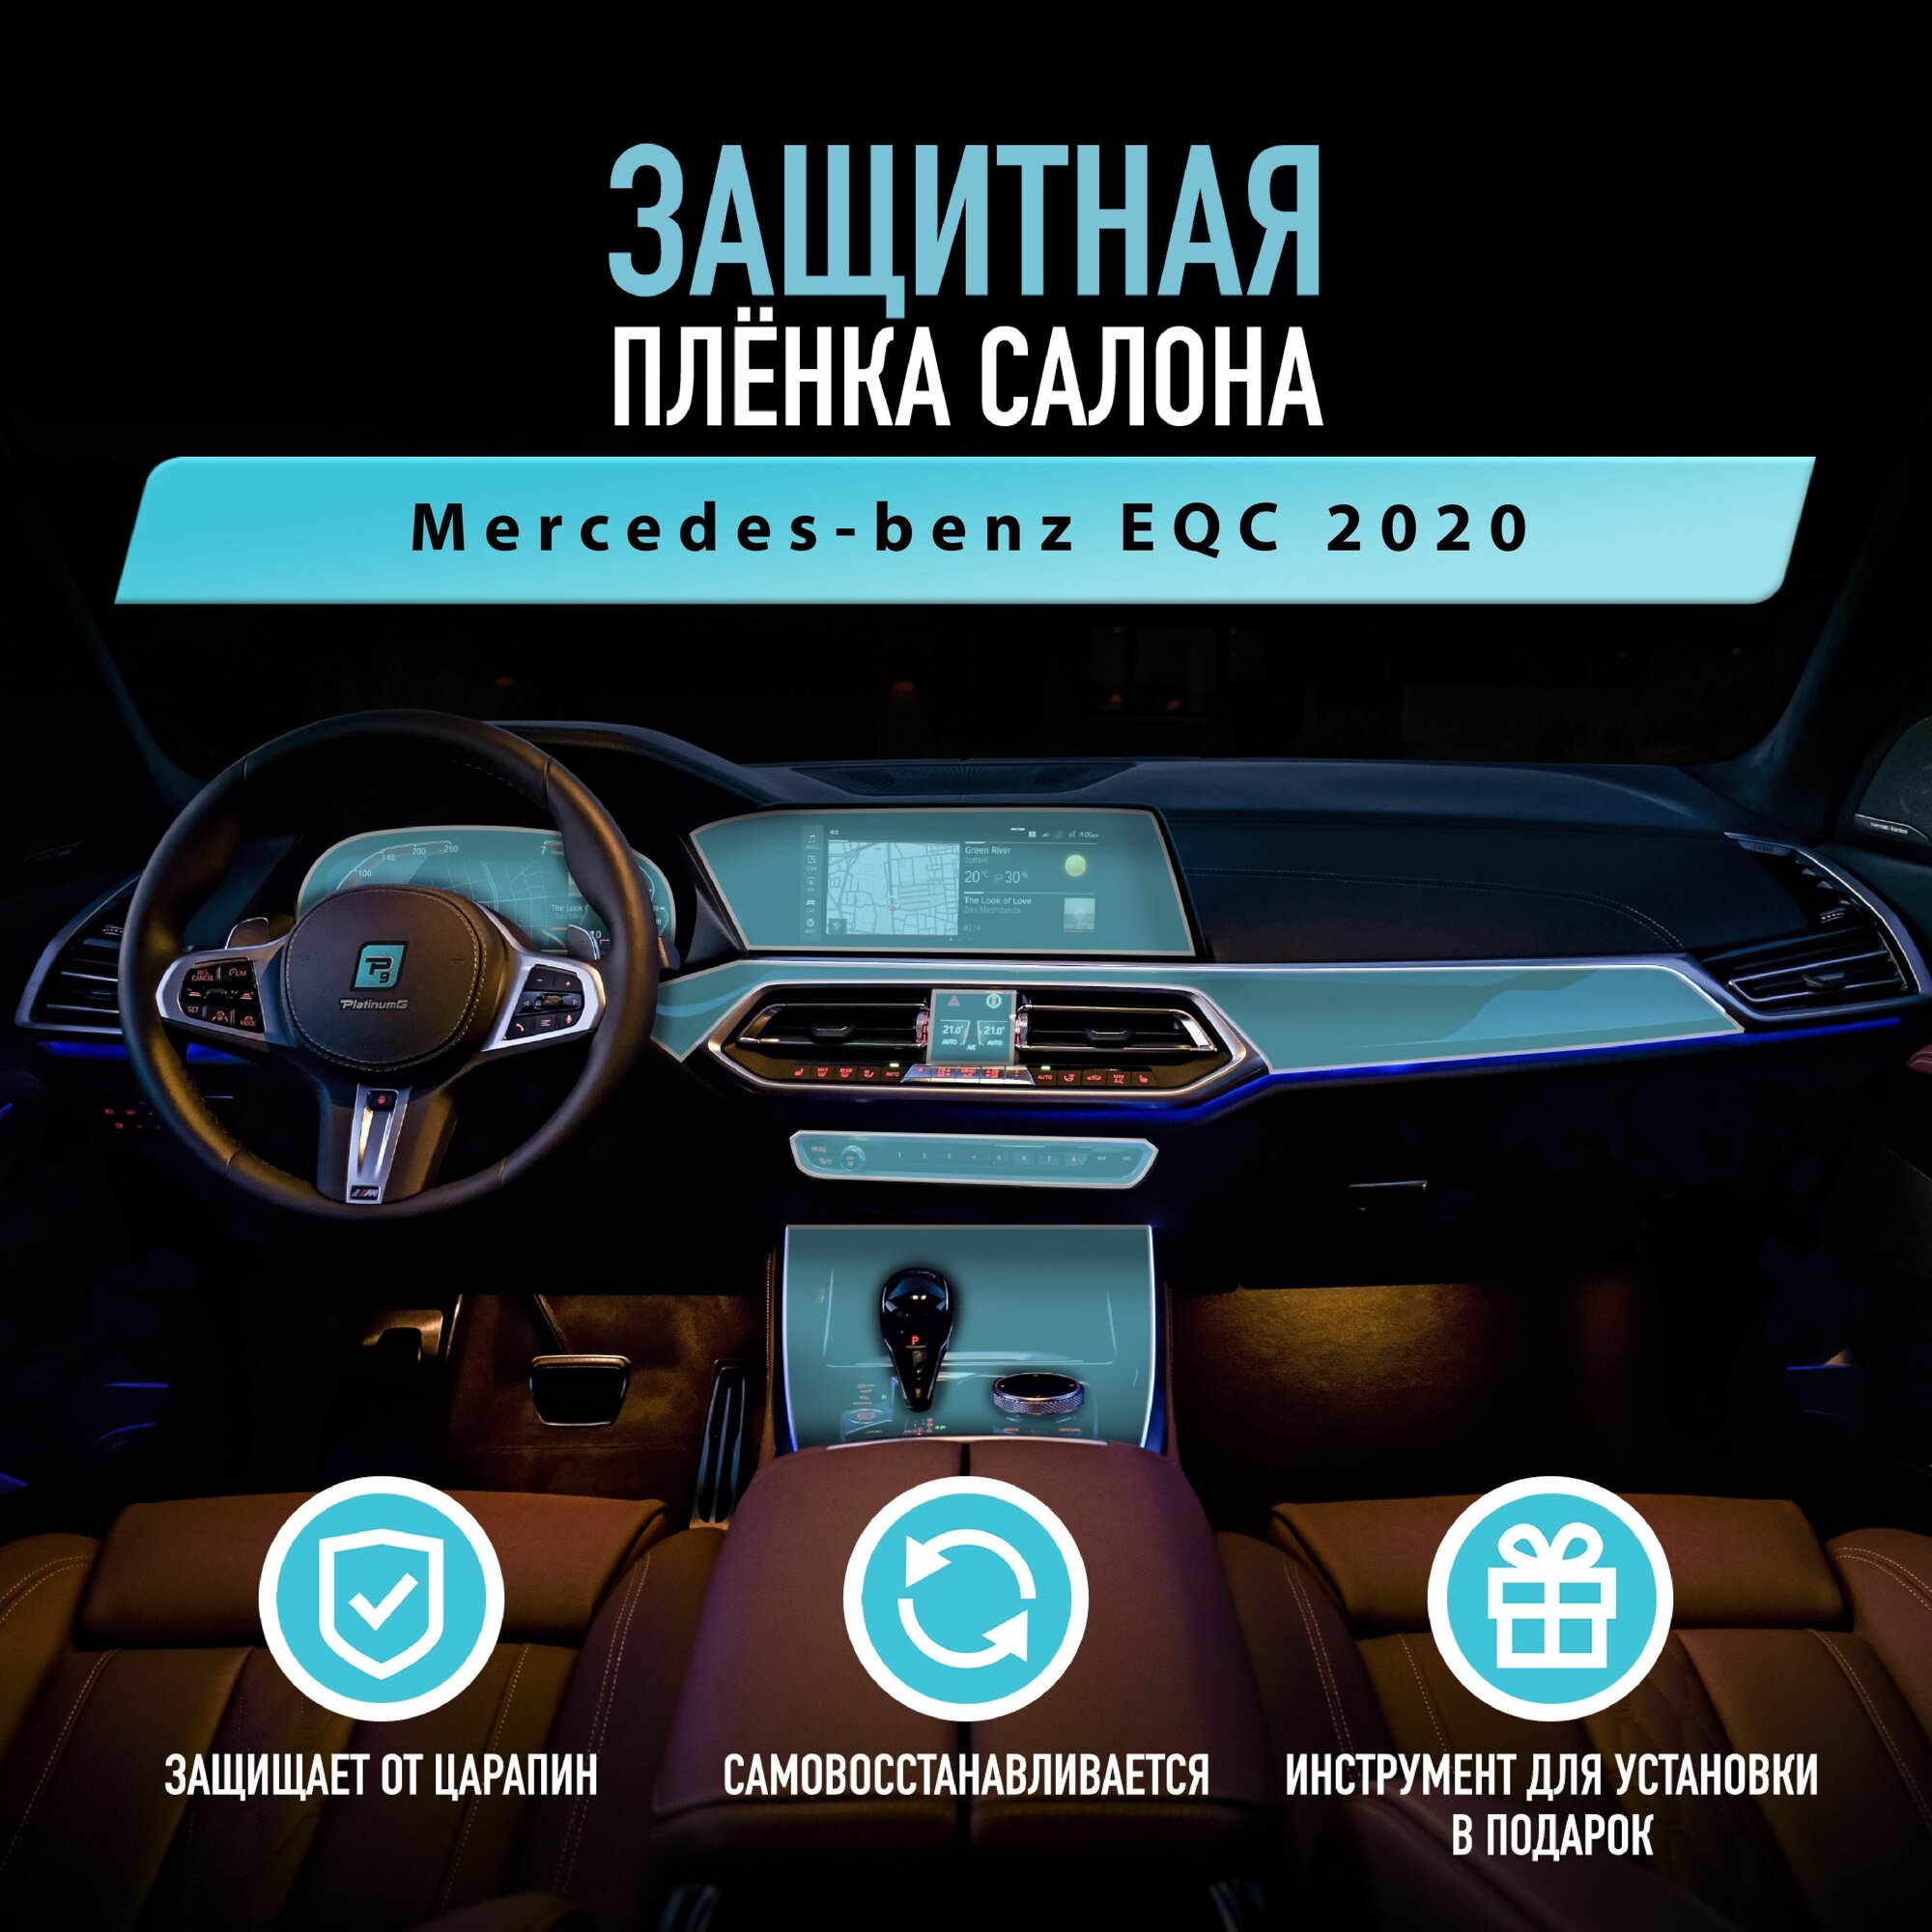 Защитная пленка для автомобиля Mercedes-benz EQC 2020 Мерседес, полиуретановая антигравийная пленка для салона, глянцевая